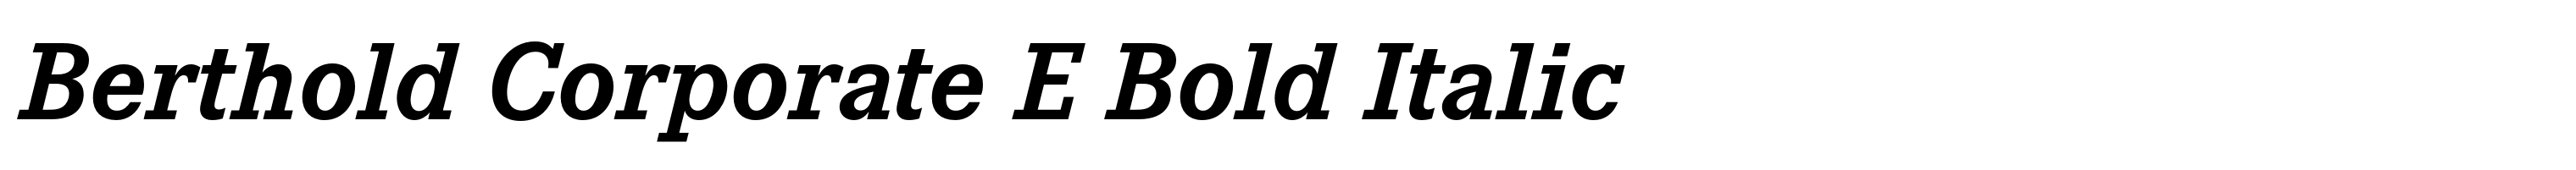 Berthold Corporate E Bold Italic